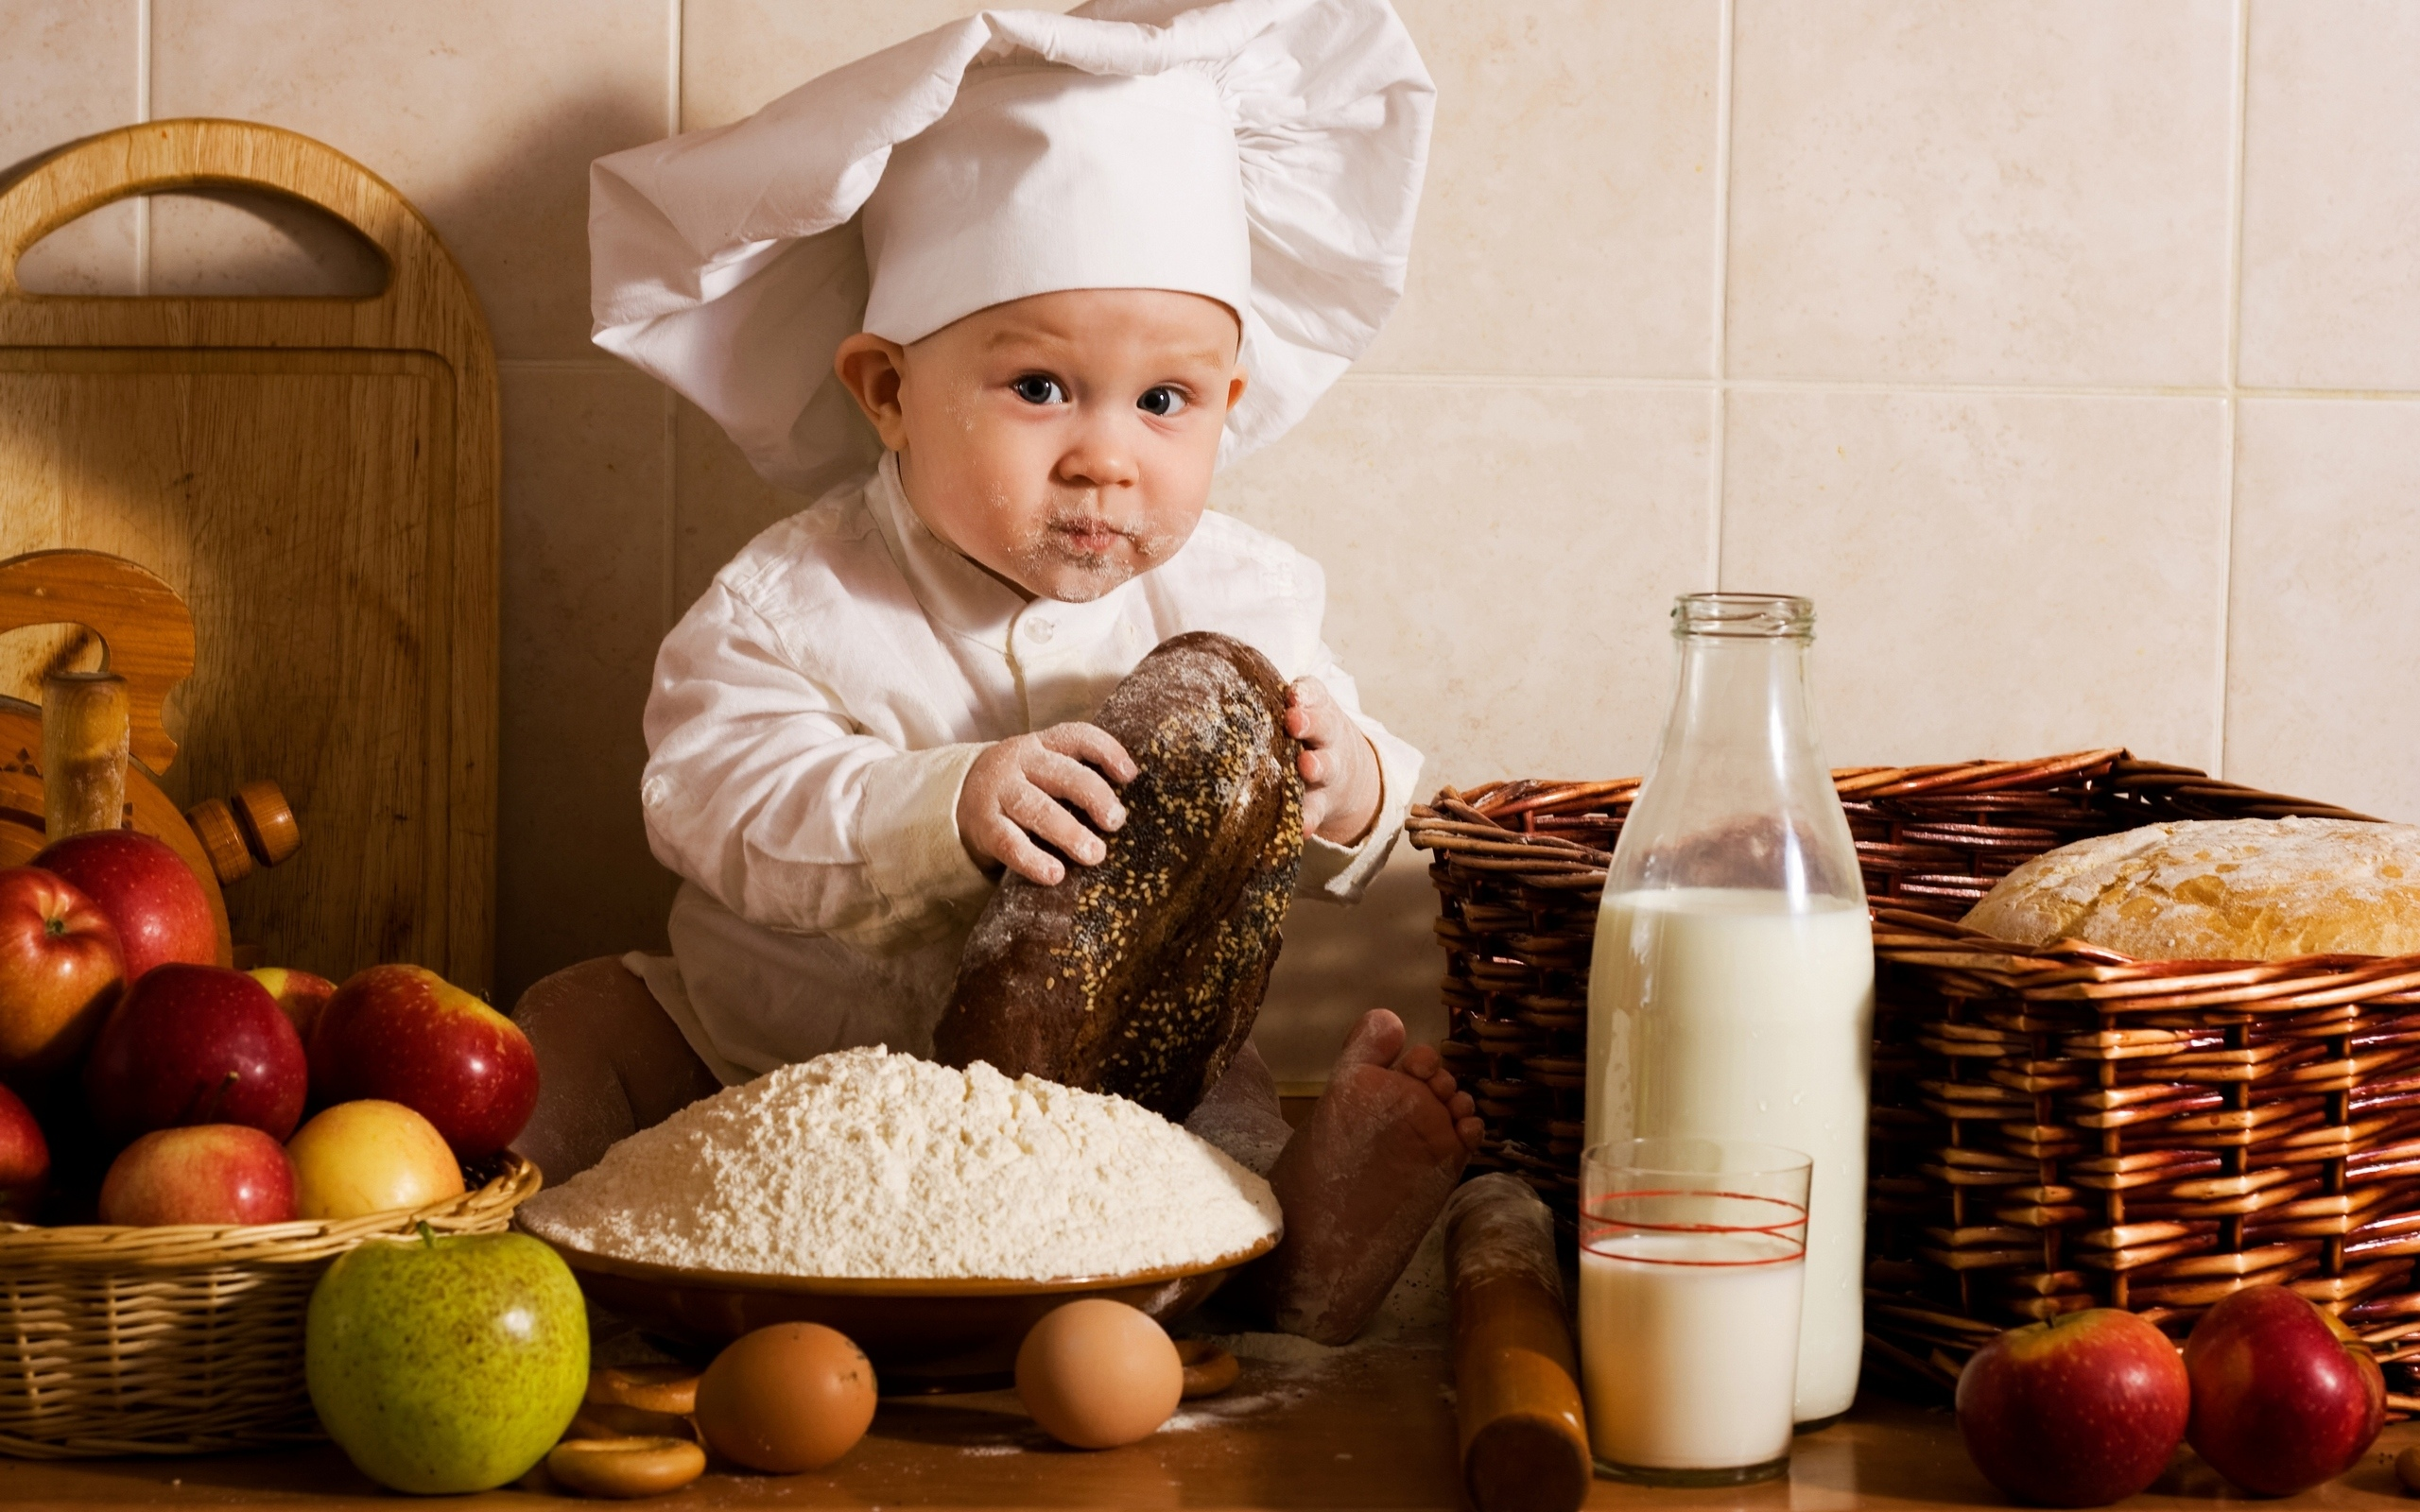 bread, baby, cap, flour, boy, milk, fruits, eggs, apples, vegetables, cook, babe, kitchen